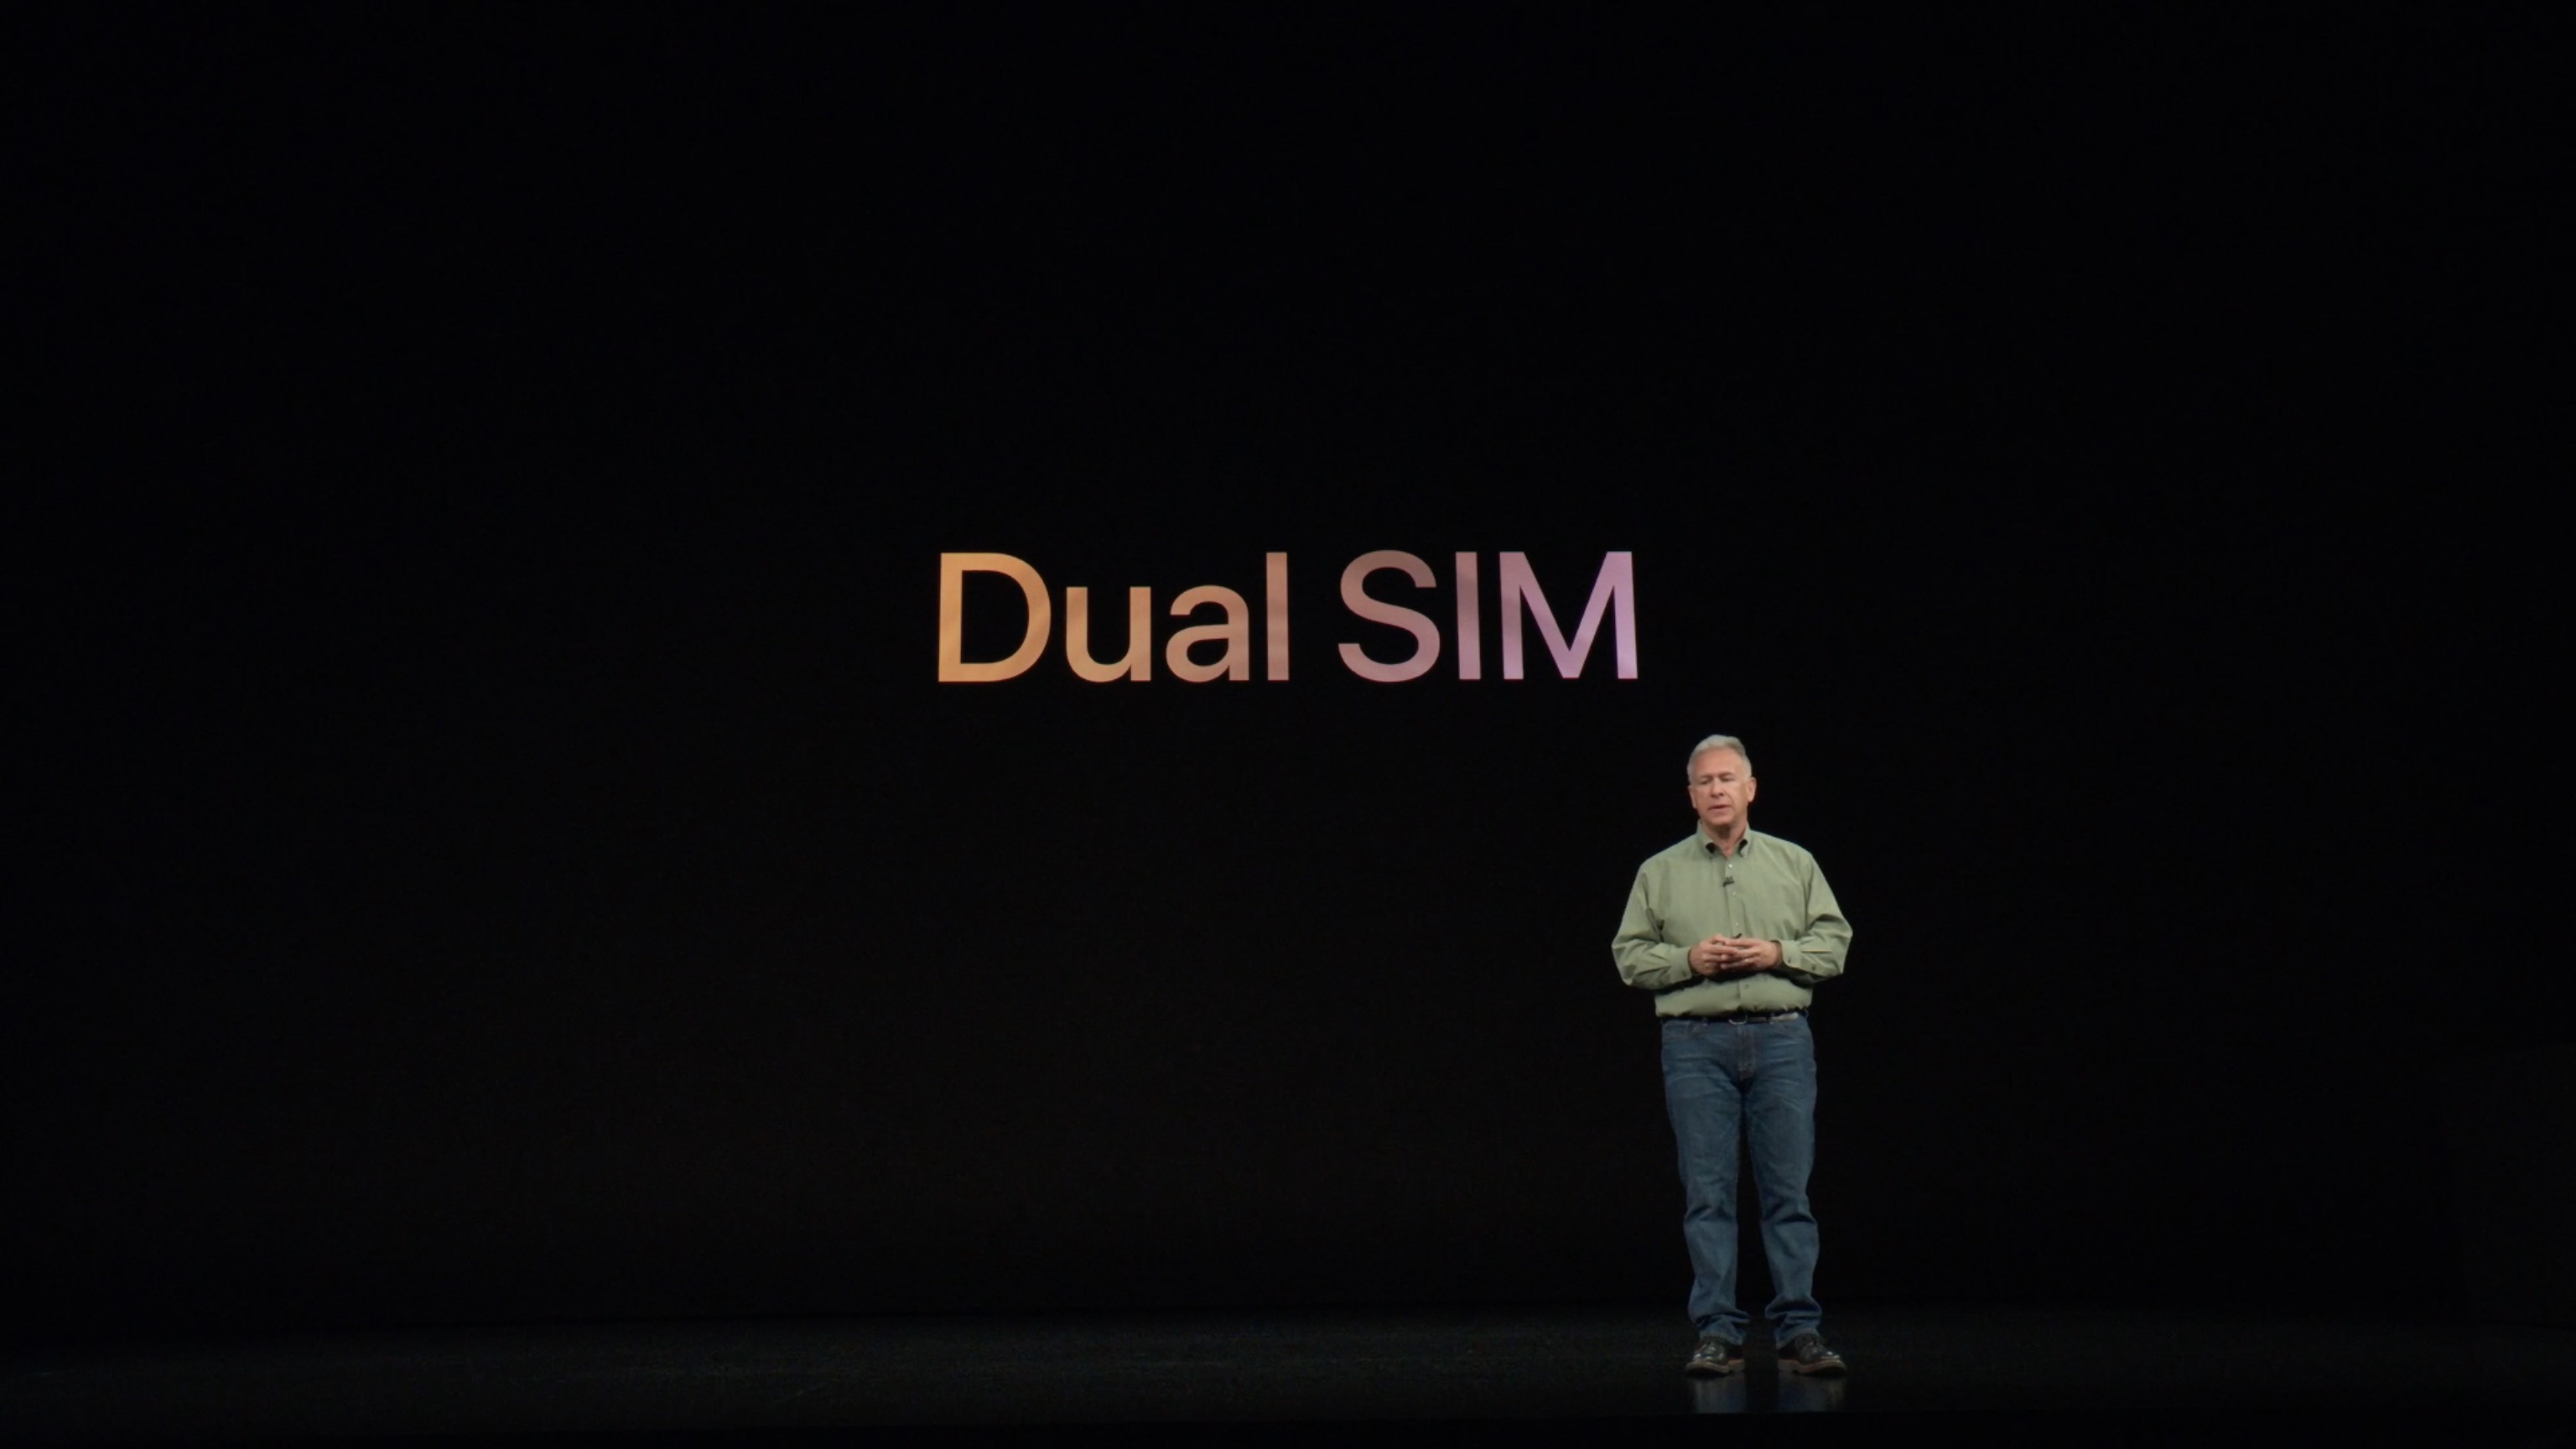 Dual SIM